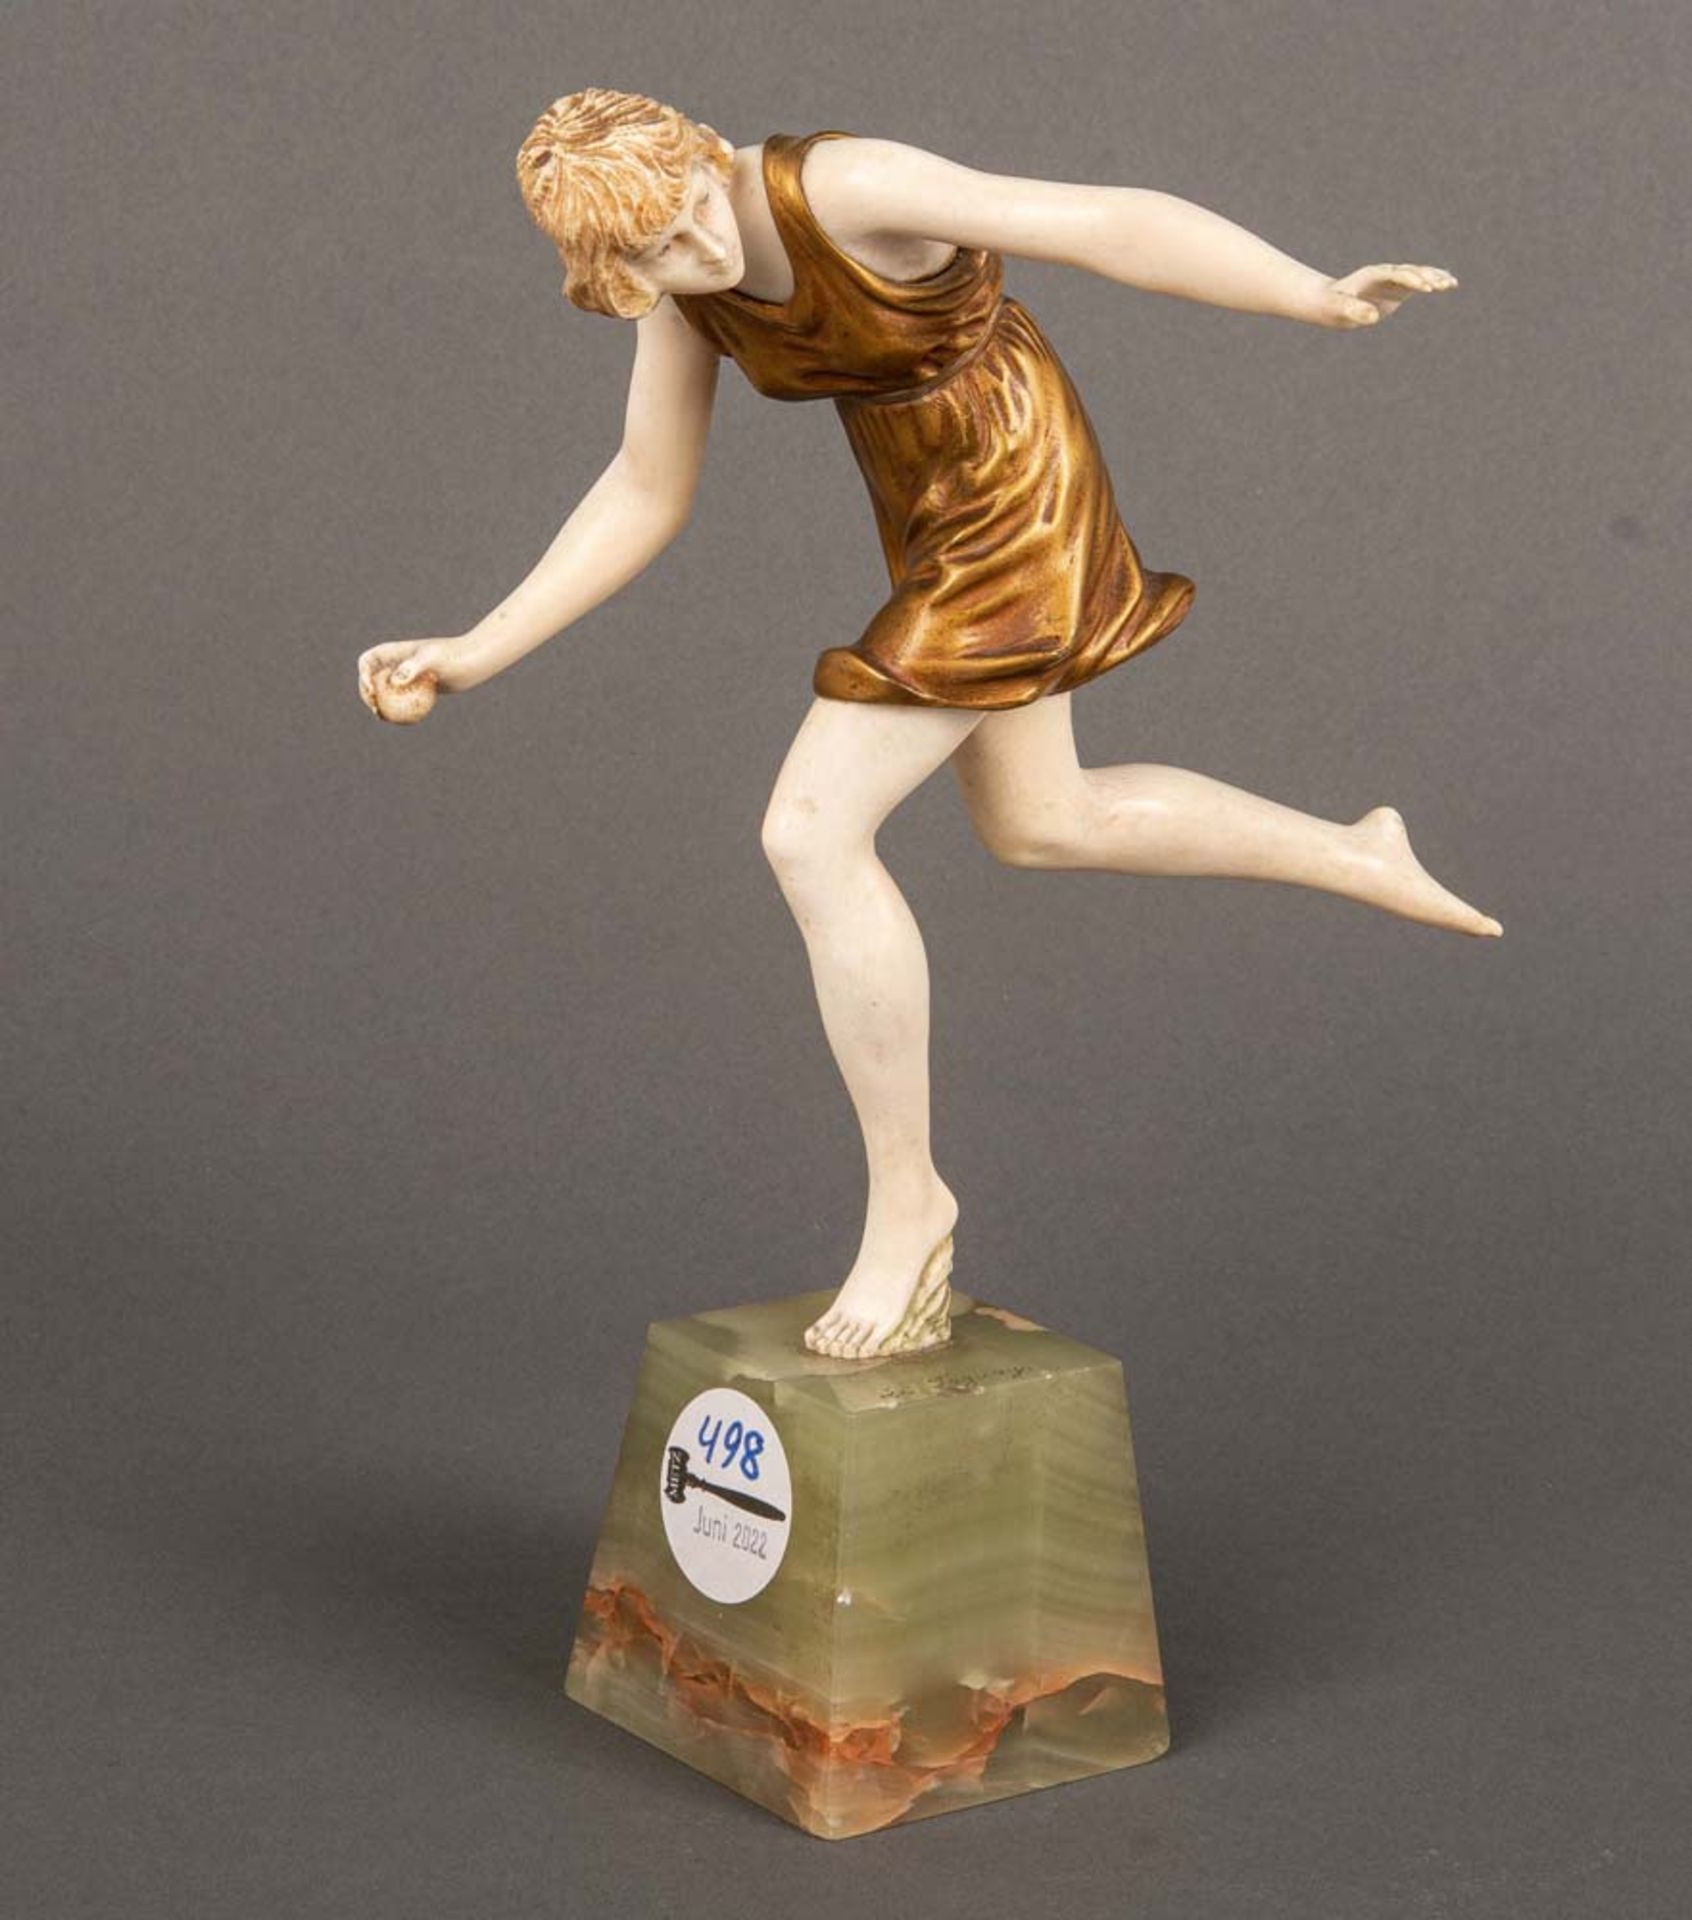 Pierre Le Faguays (1892-1962). Balancierende Kugelspielerin. Bronze / Bein, geschnitzt, auf erhöhtem